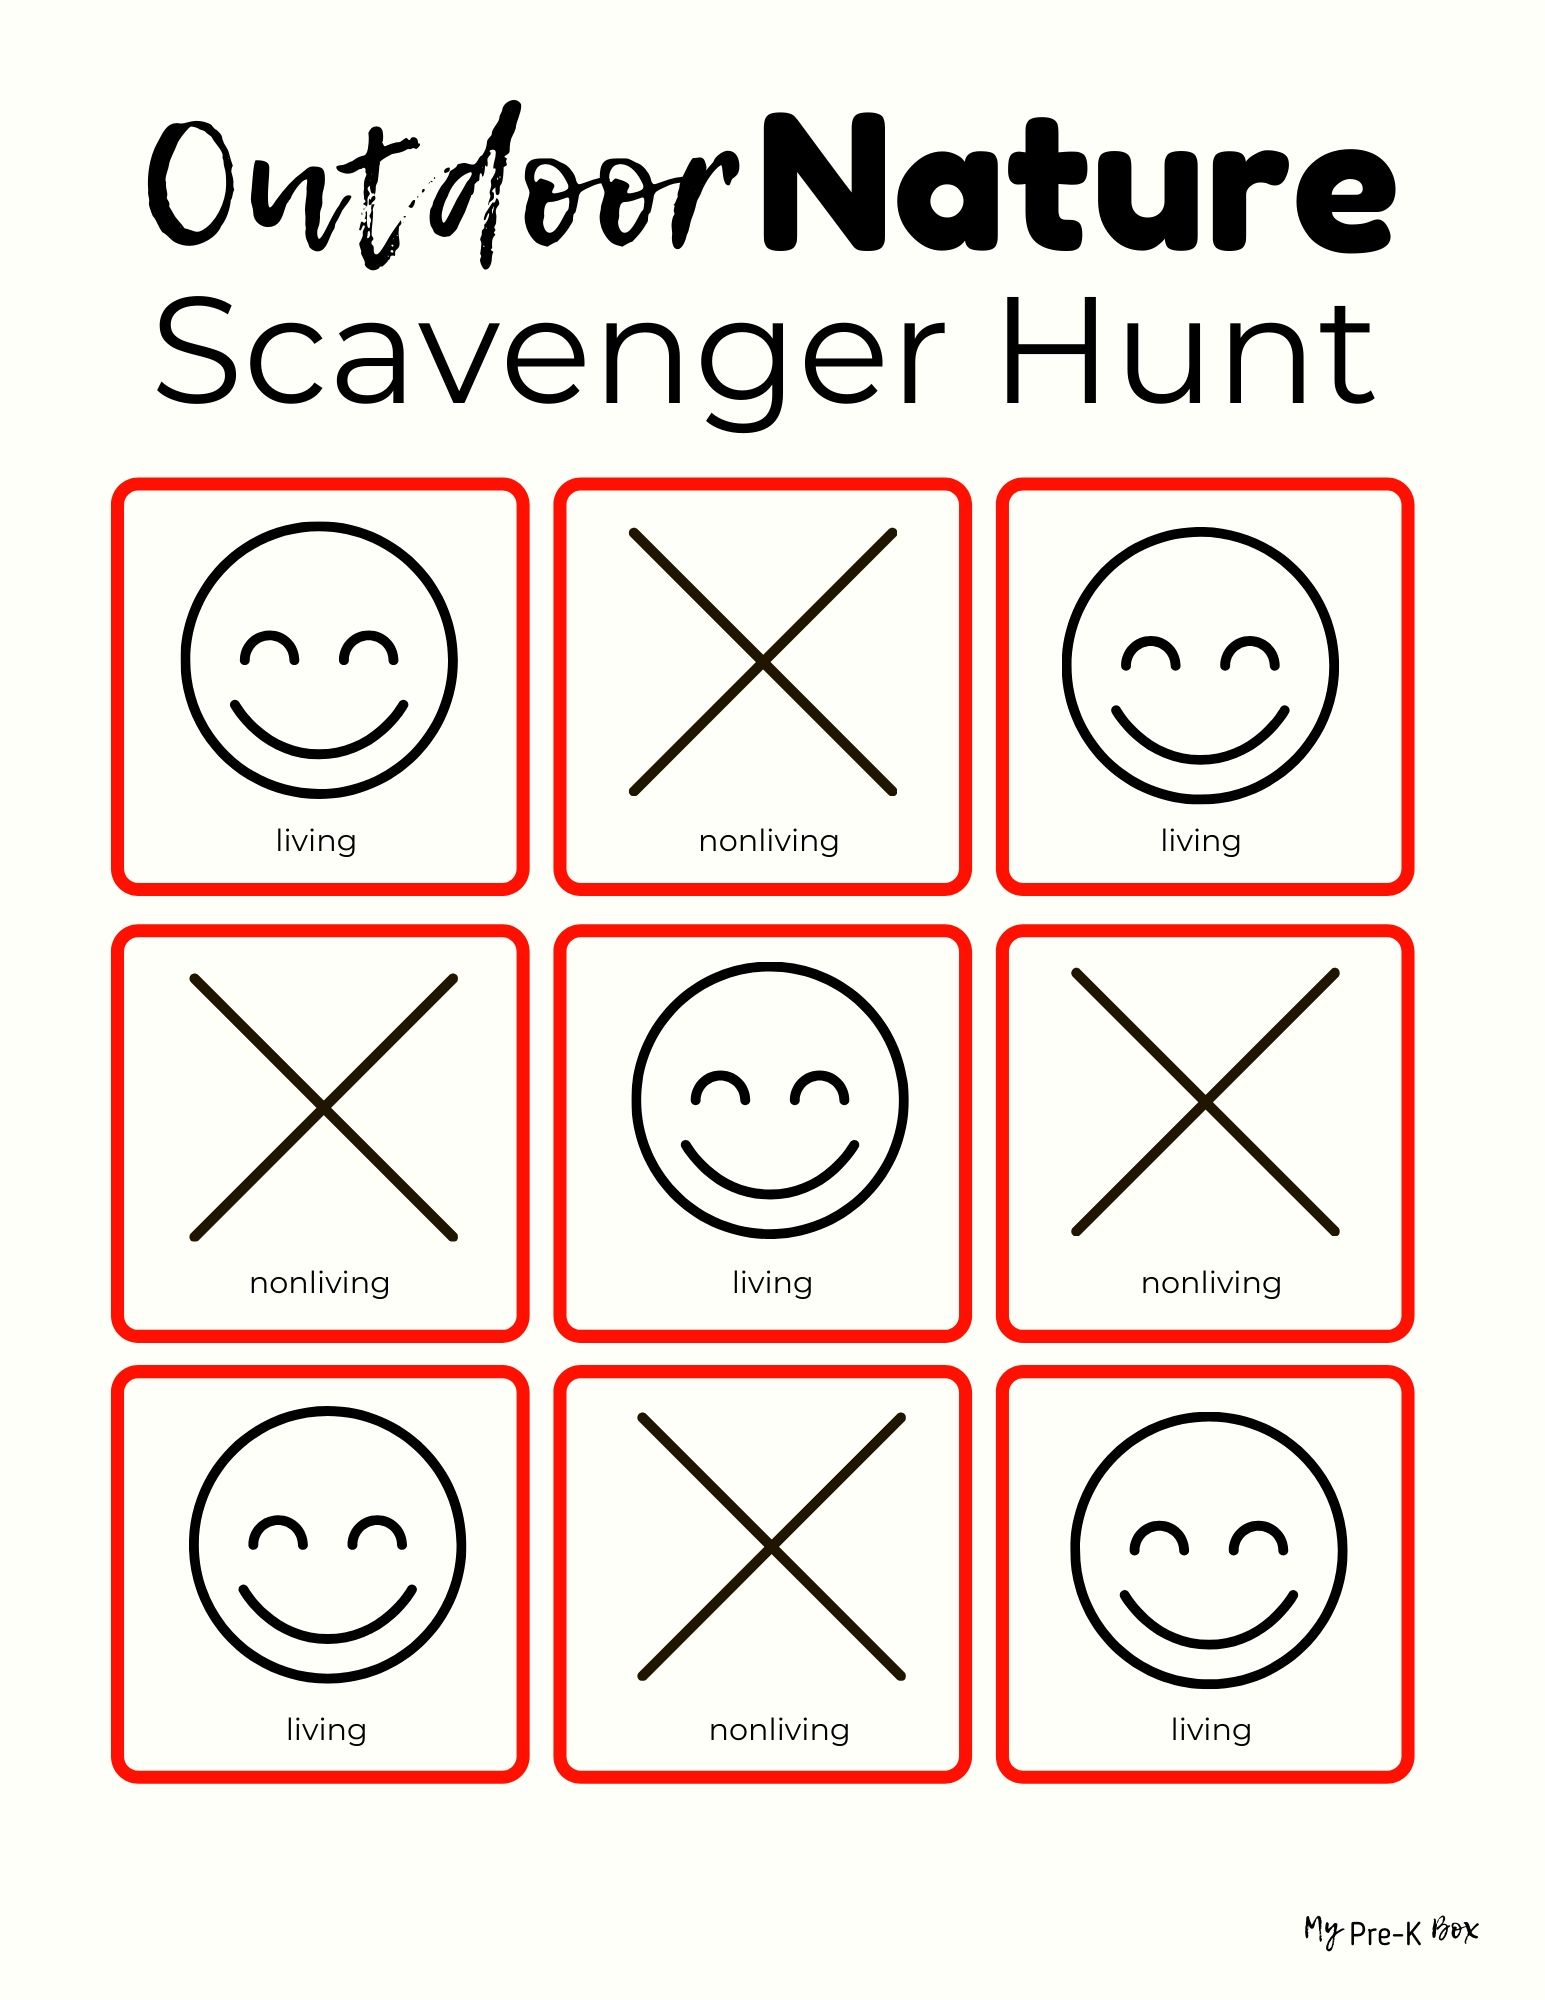 1571-my-pre-k-box-nature-scavenger-hunt-board.jpg